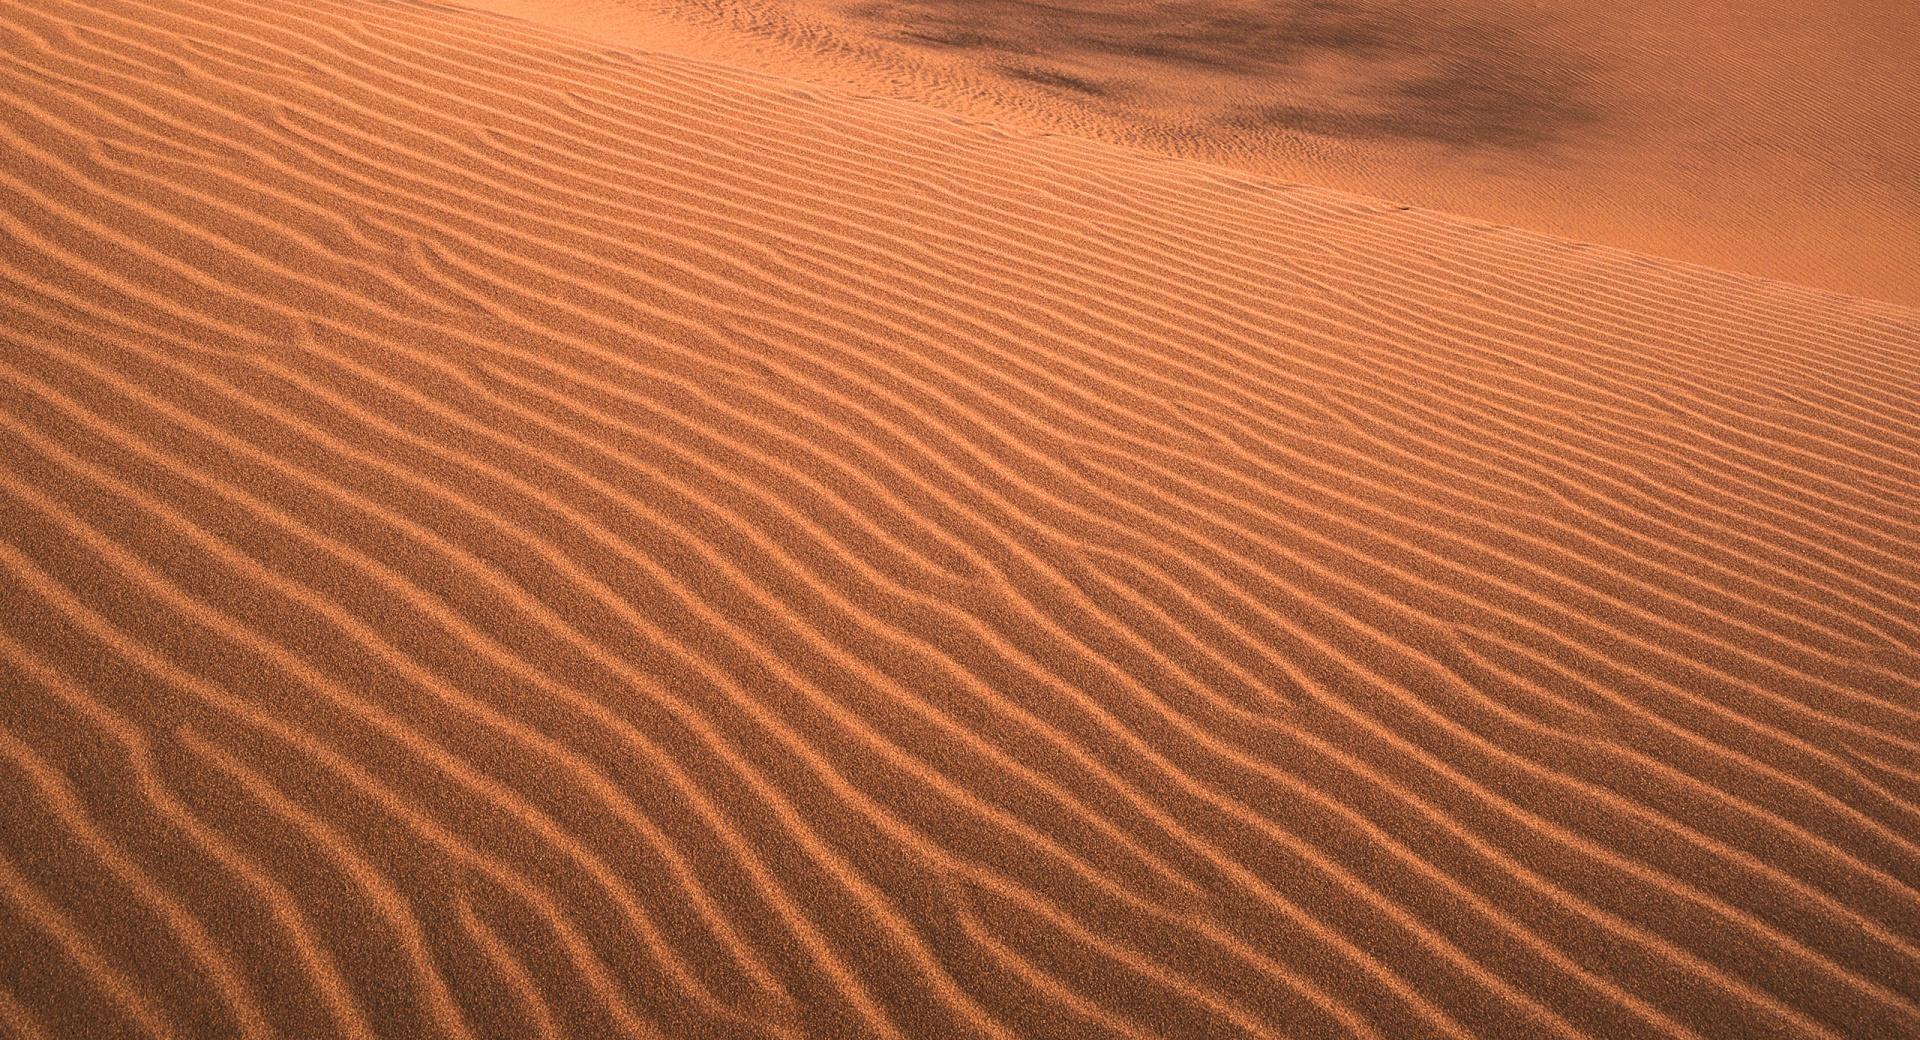 Desert Sand wallpapers HD quality